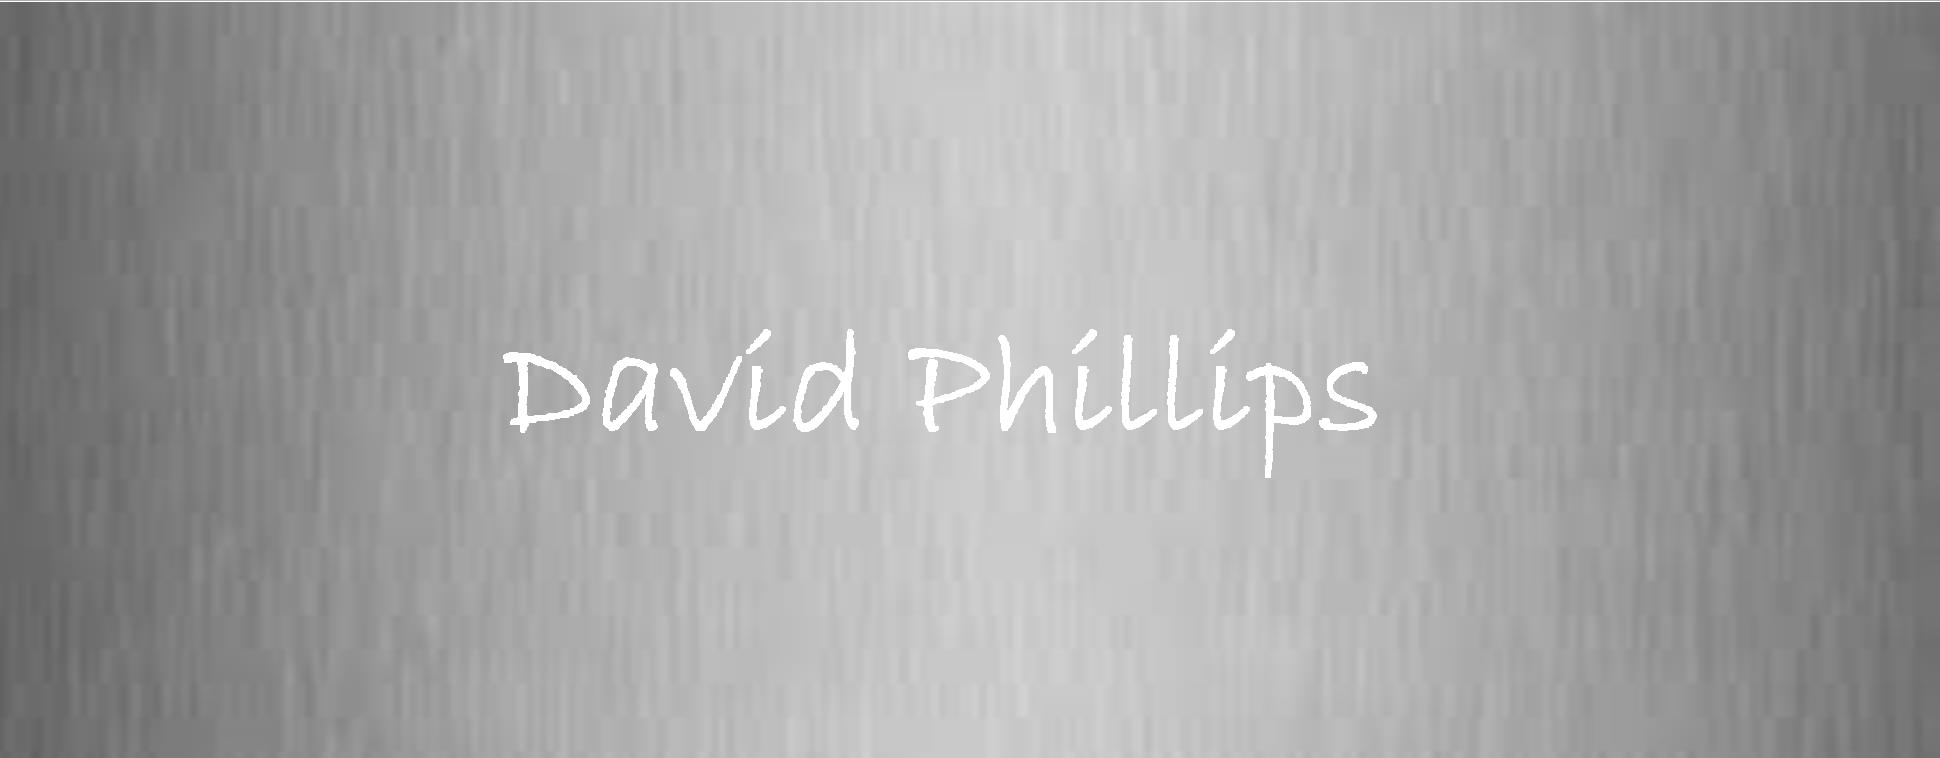 David Phillips.jpg